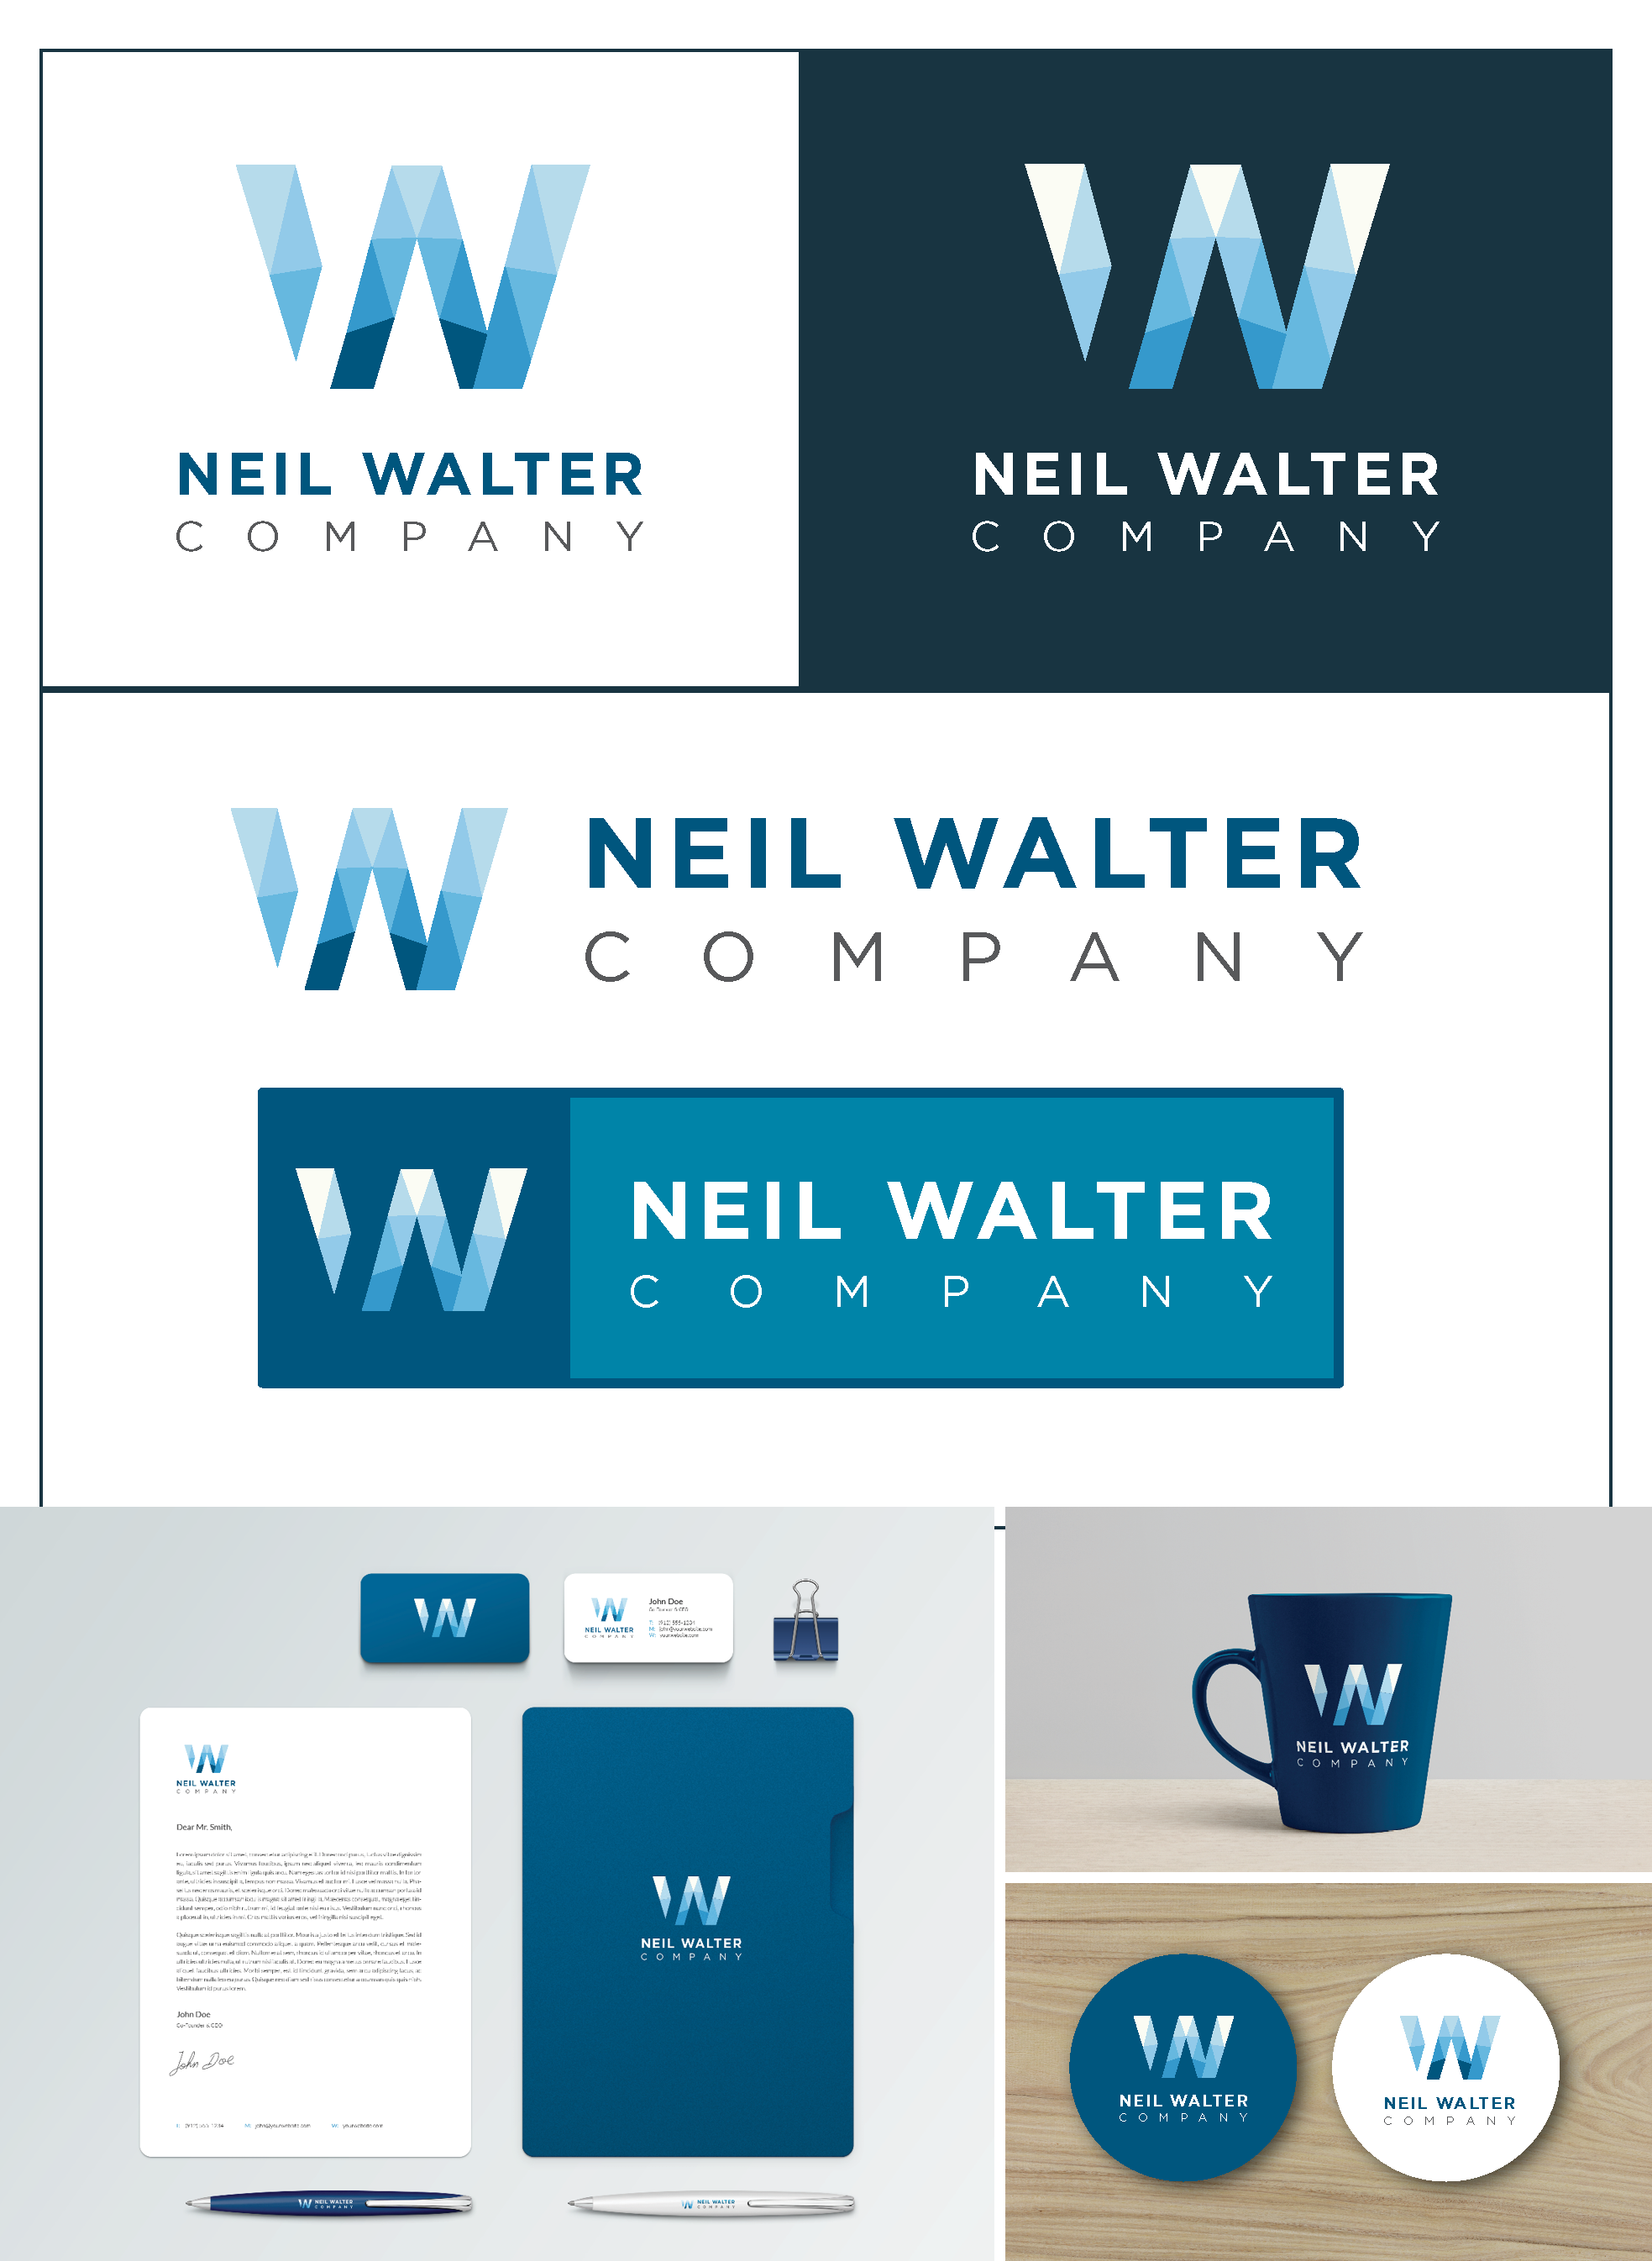 Neil Walter Company (GD)